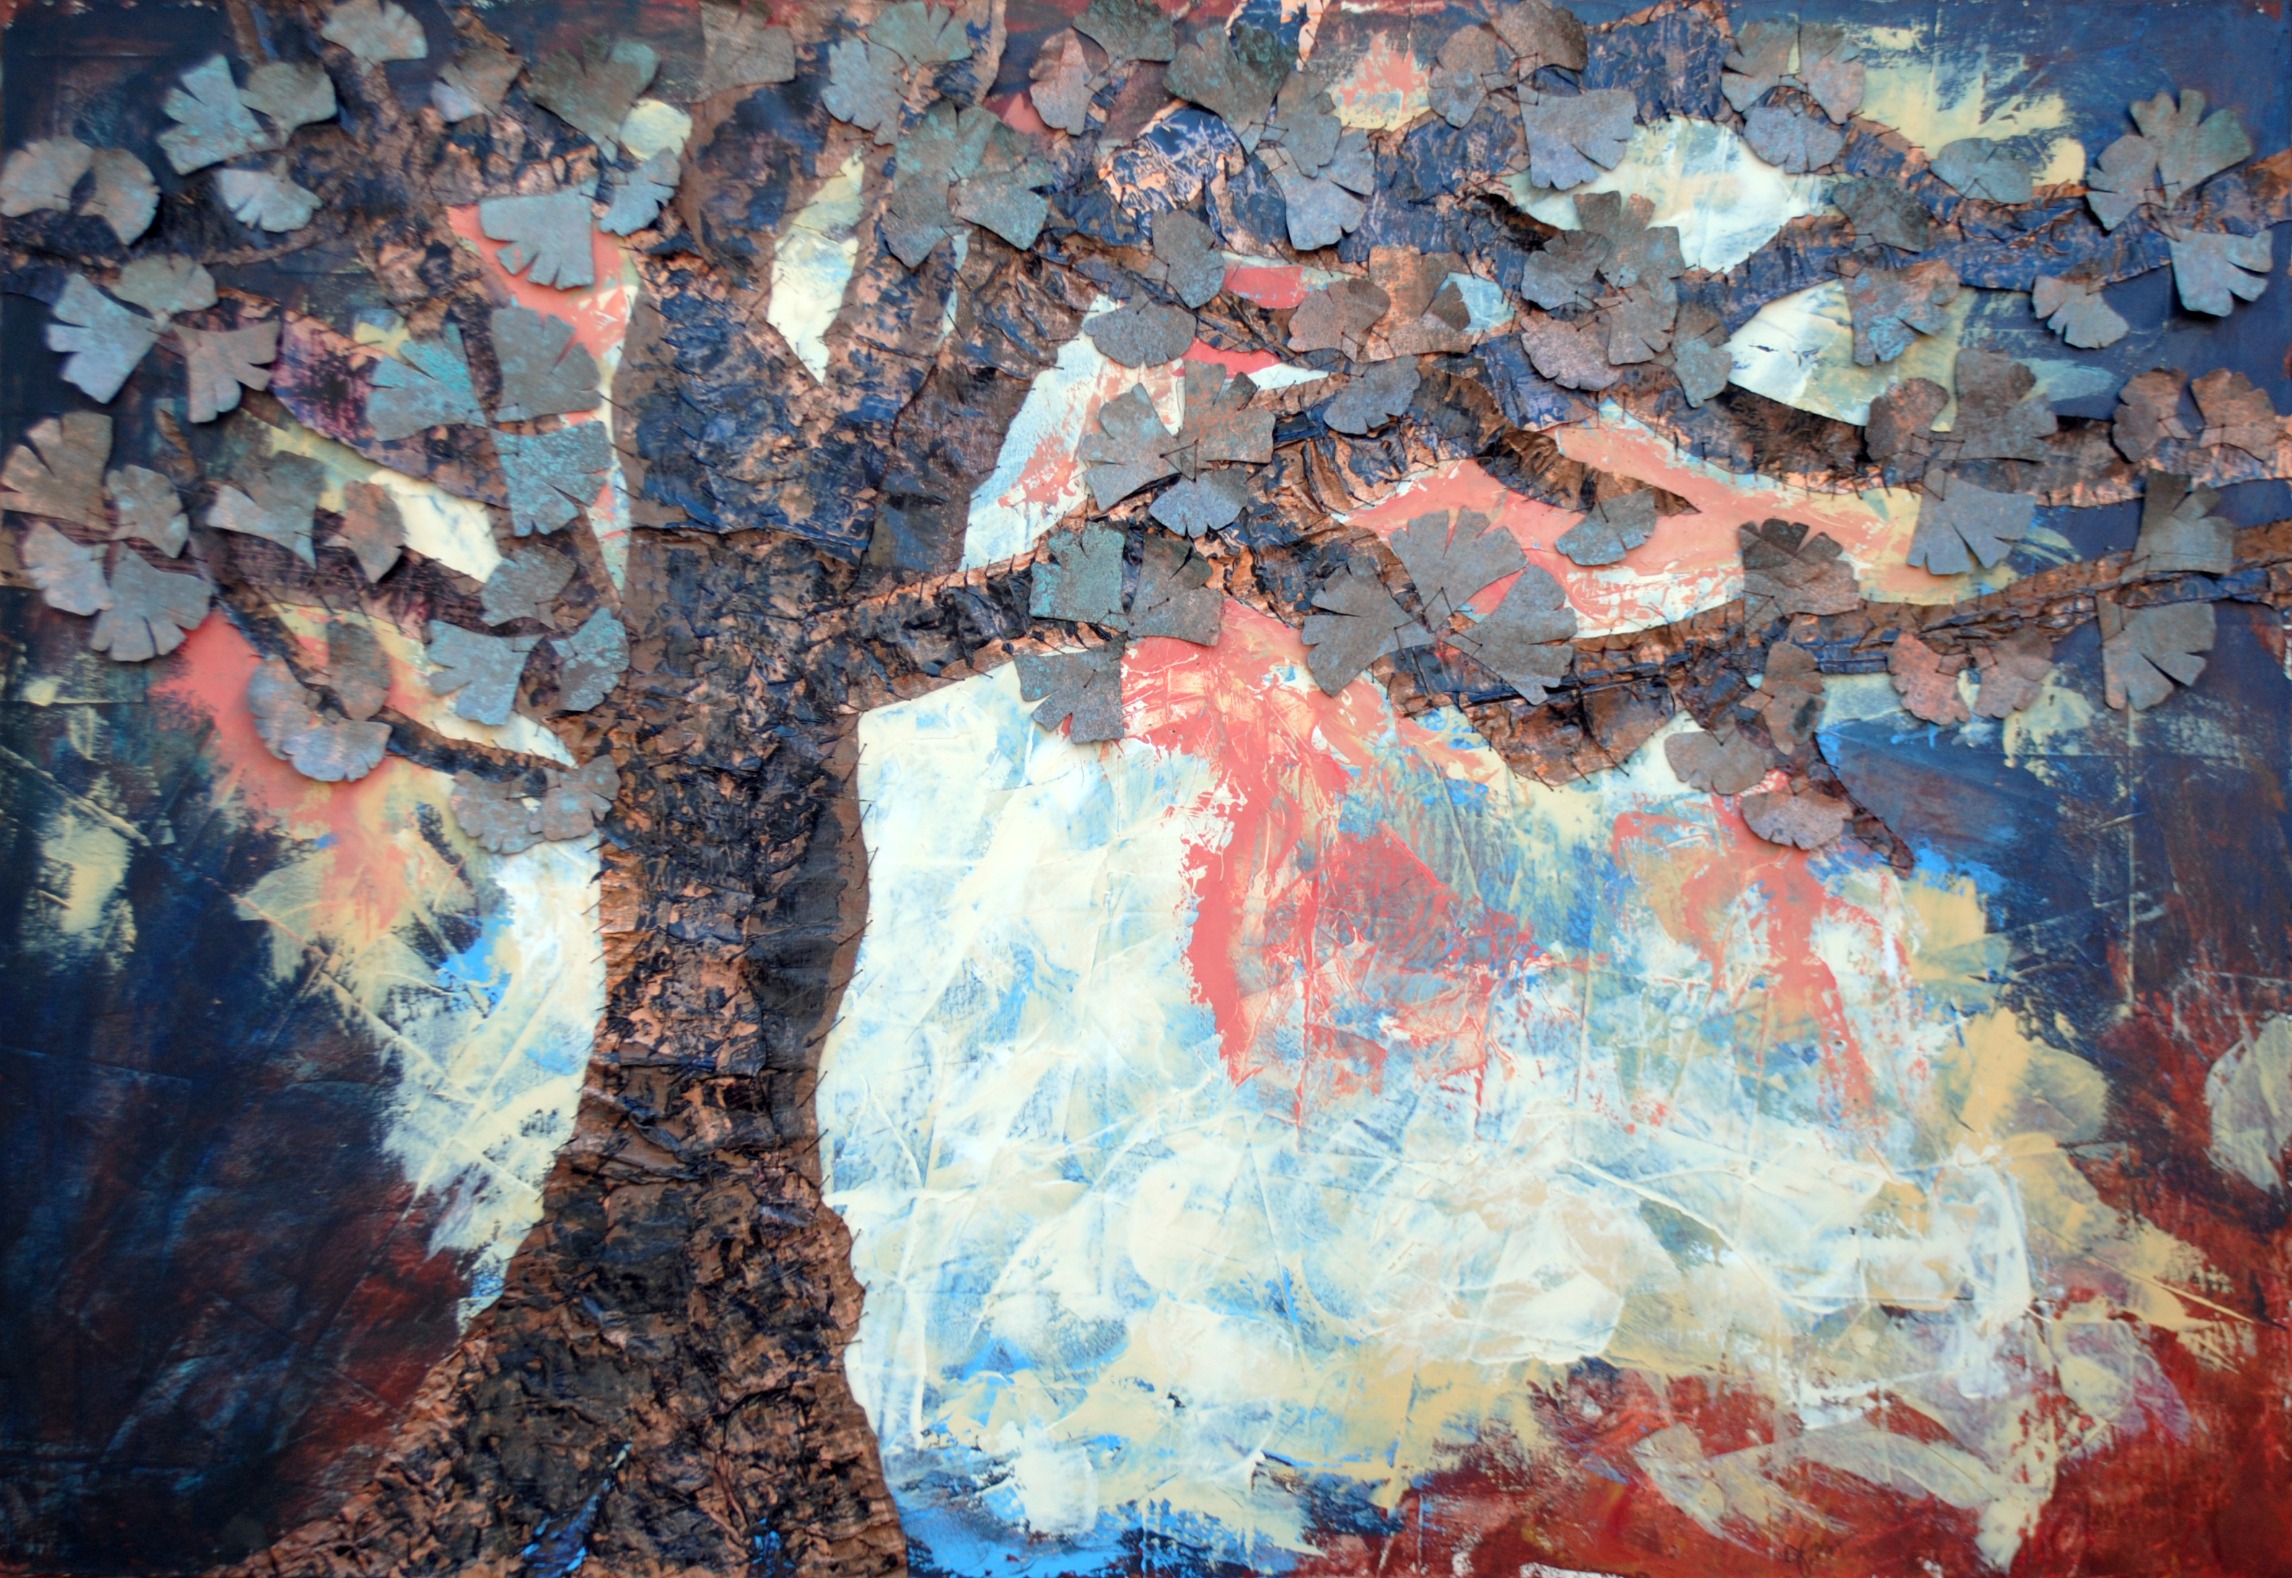 Julia's Ginkgo 24x36 Sewn Copper on Canvas Commission for Private Collection